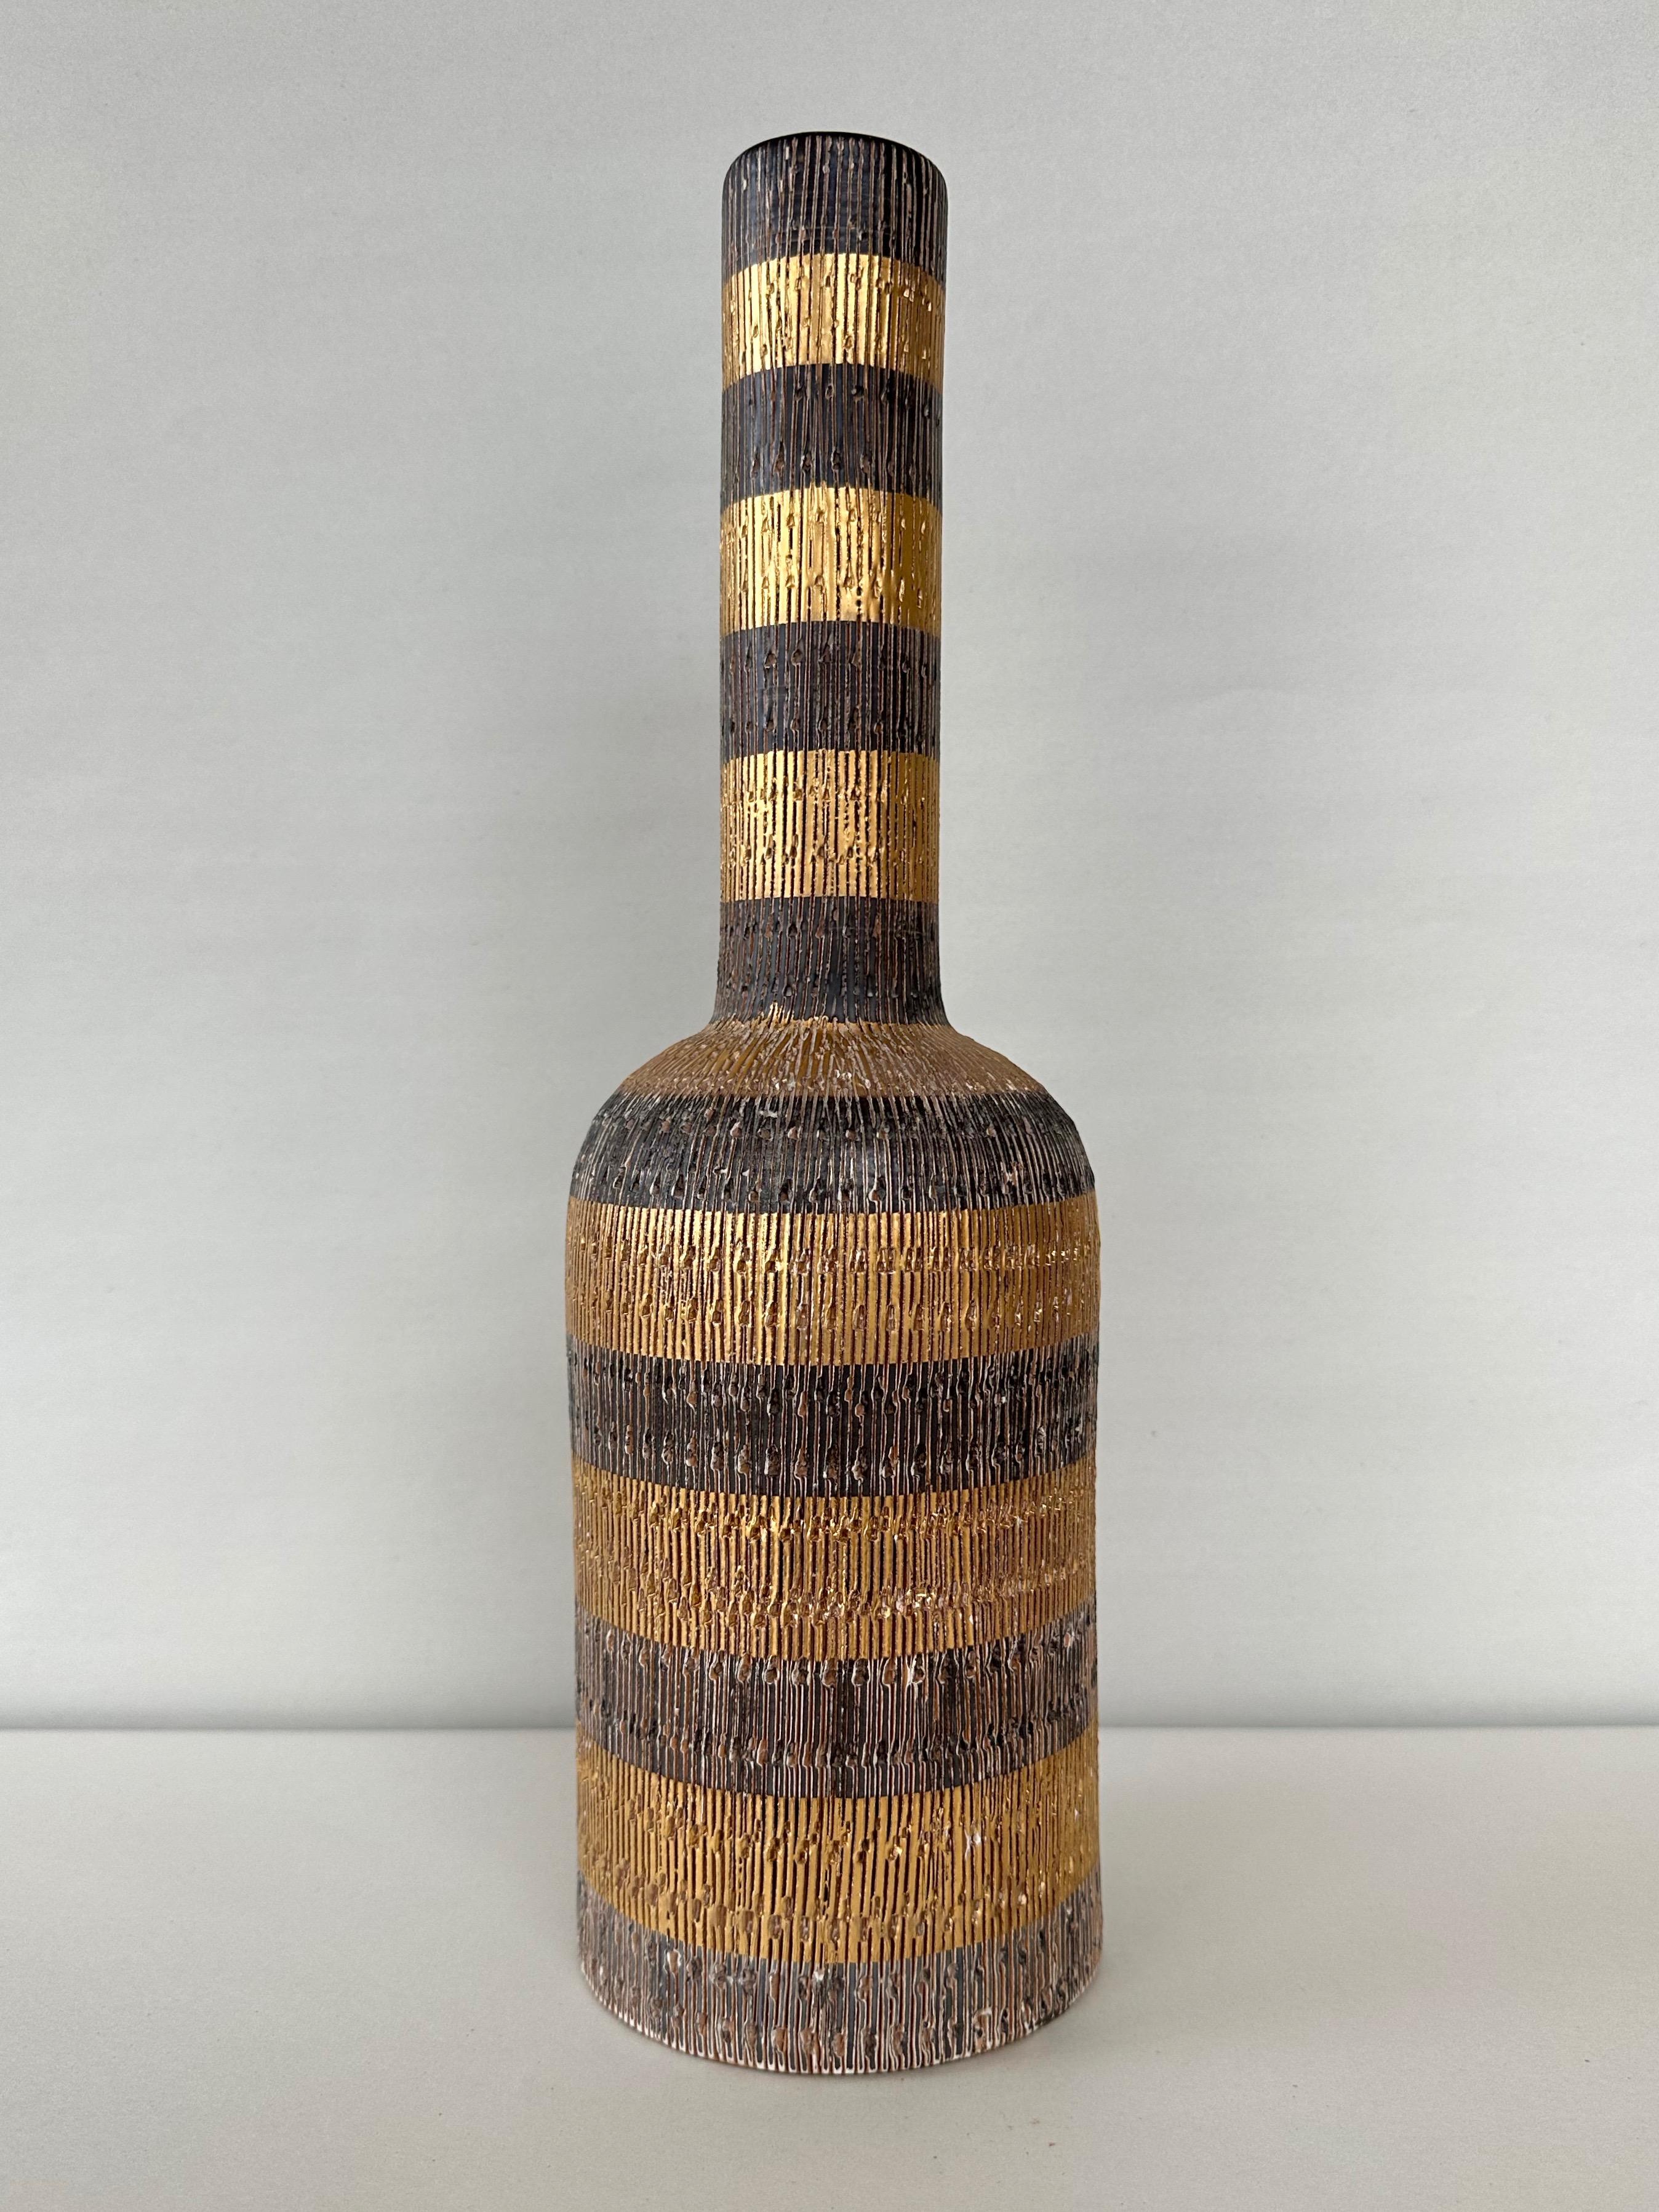 Aldo Londi for Bitossi via Raymor Seta Glazed Incised Pottery Bottle Vase, 1950s 8